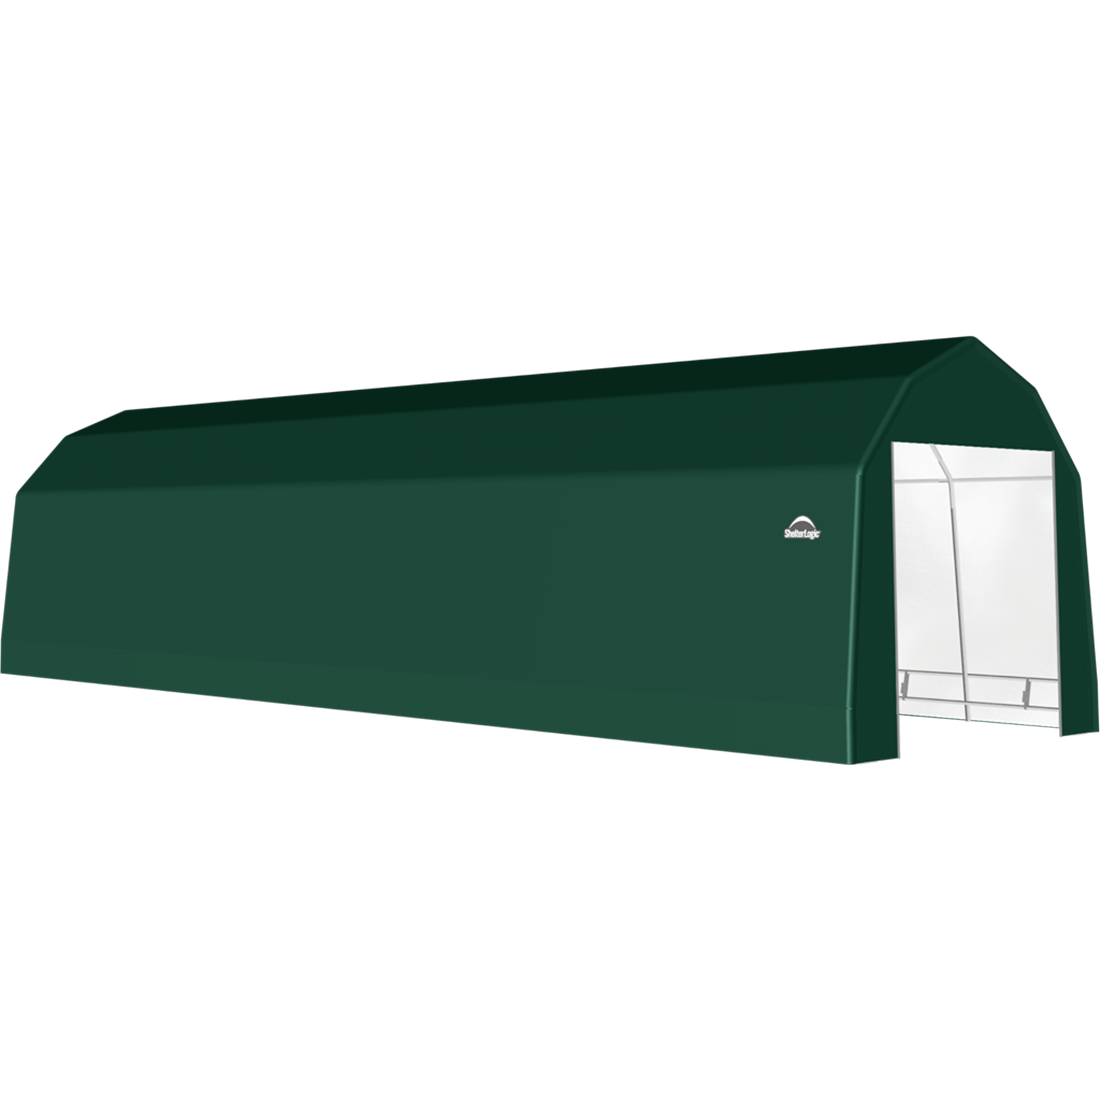 ShelterTech SP Series Barn Shelter, 12 ft. x 48 ft. x 11 ft. Heavy Duty PVC 14.5 oz. Green